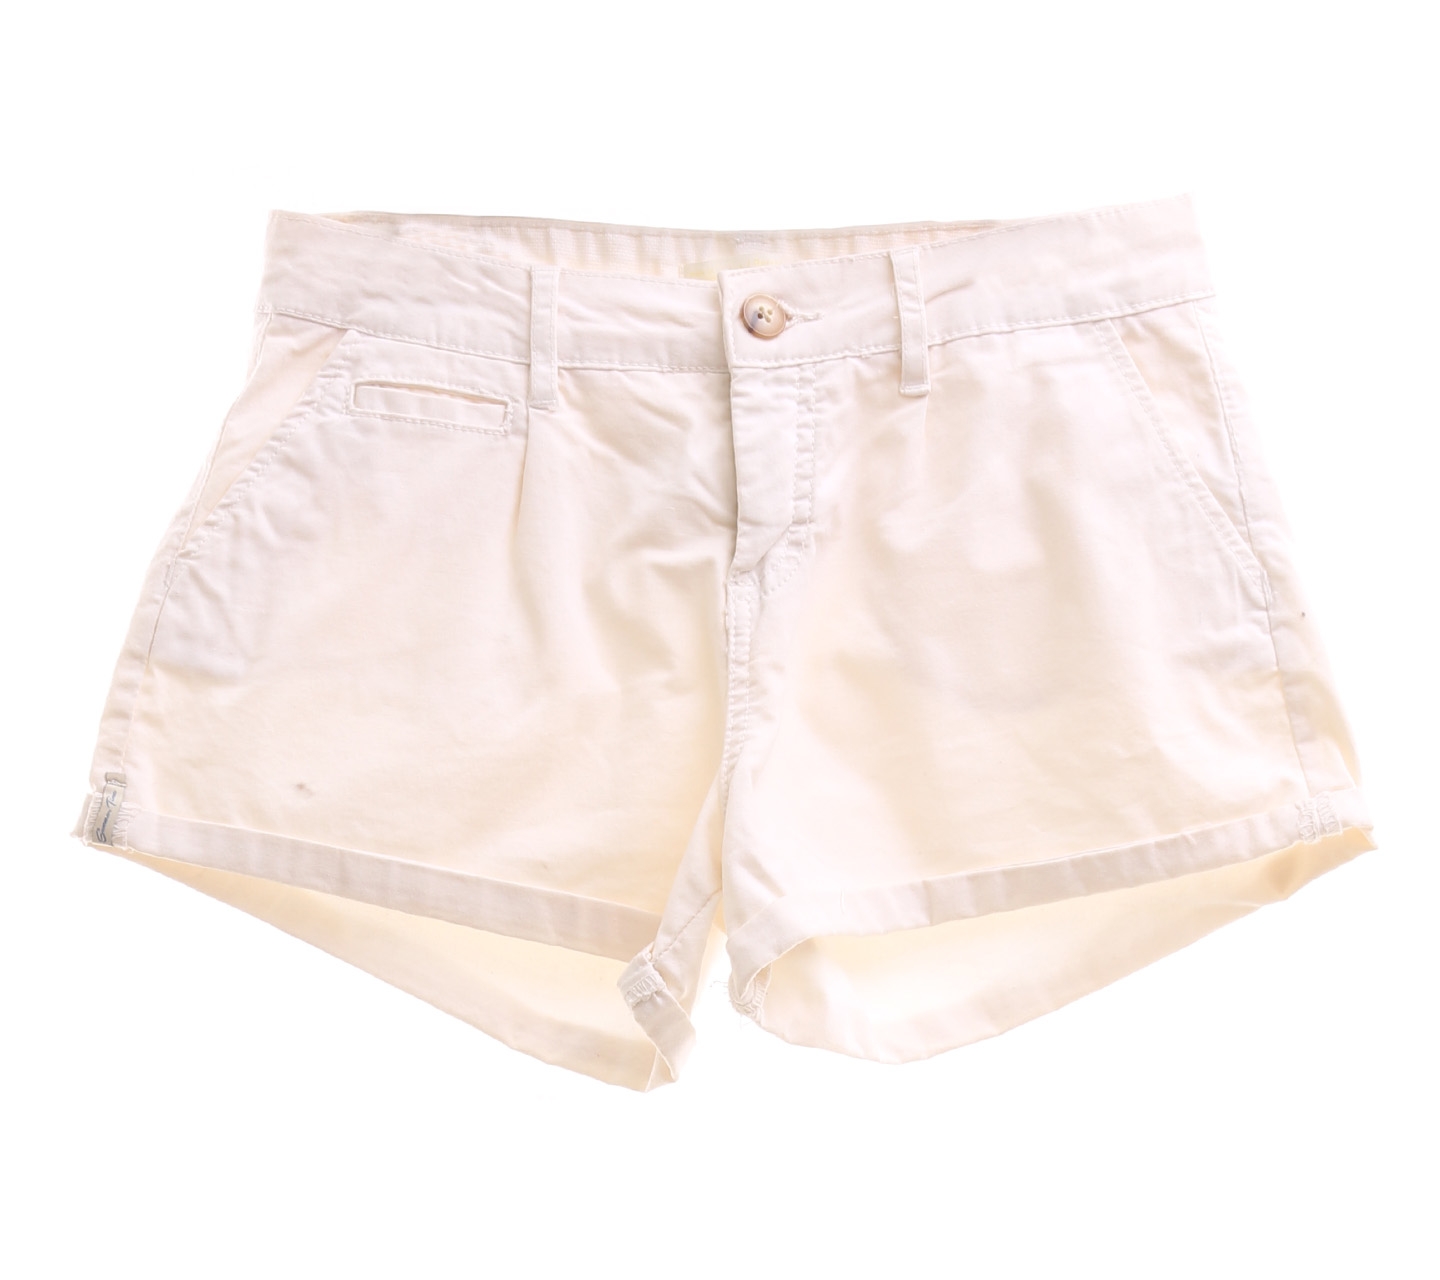 Bershka White Shorts Pants 